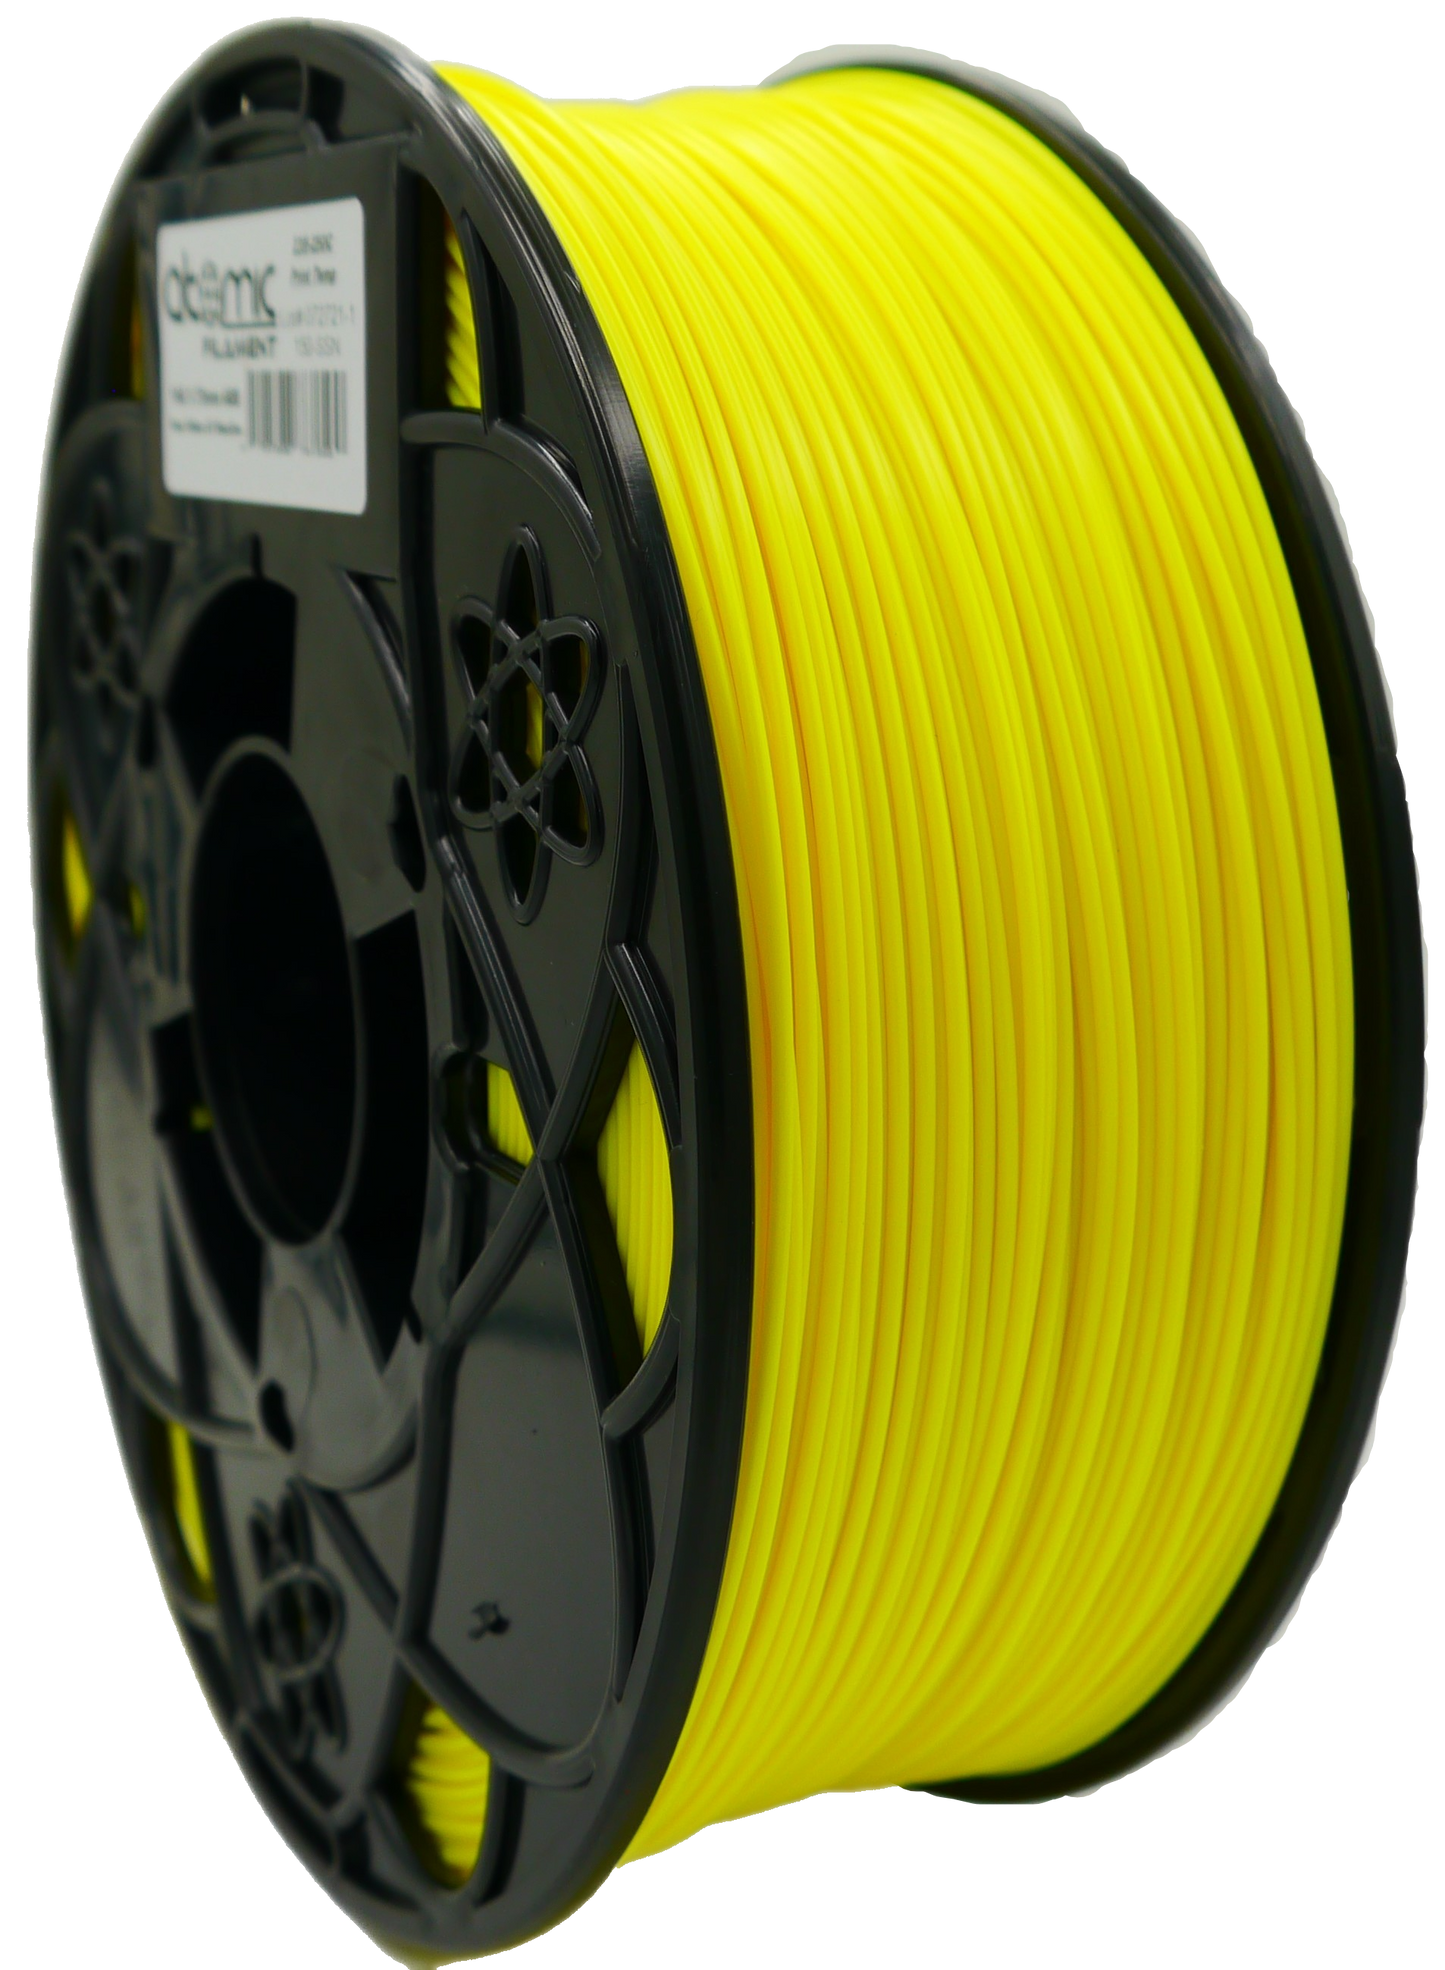 Neon Yellow UV Reactive ABS Filament